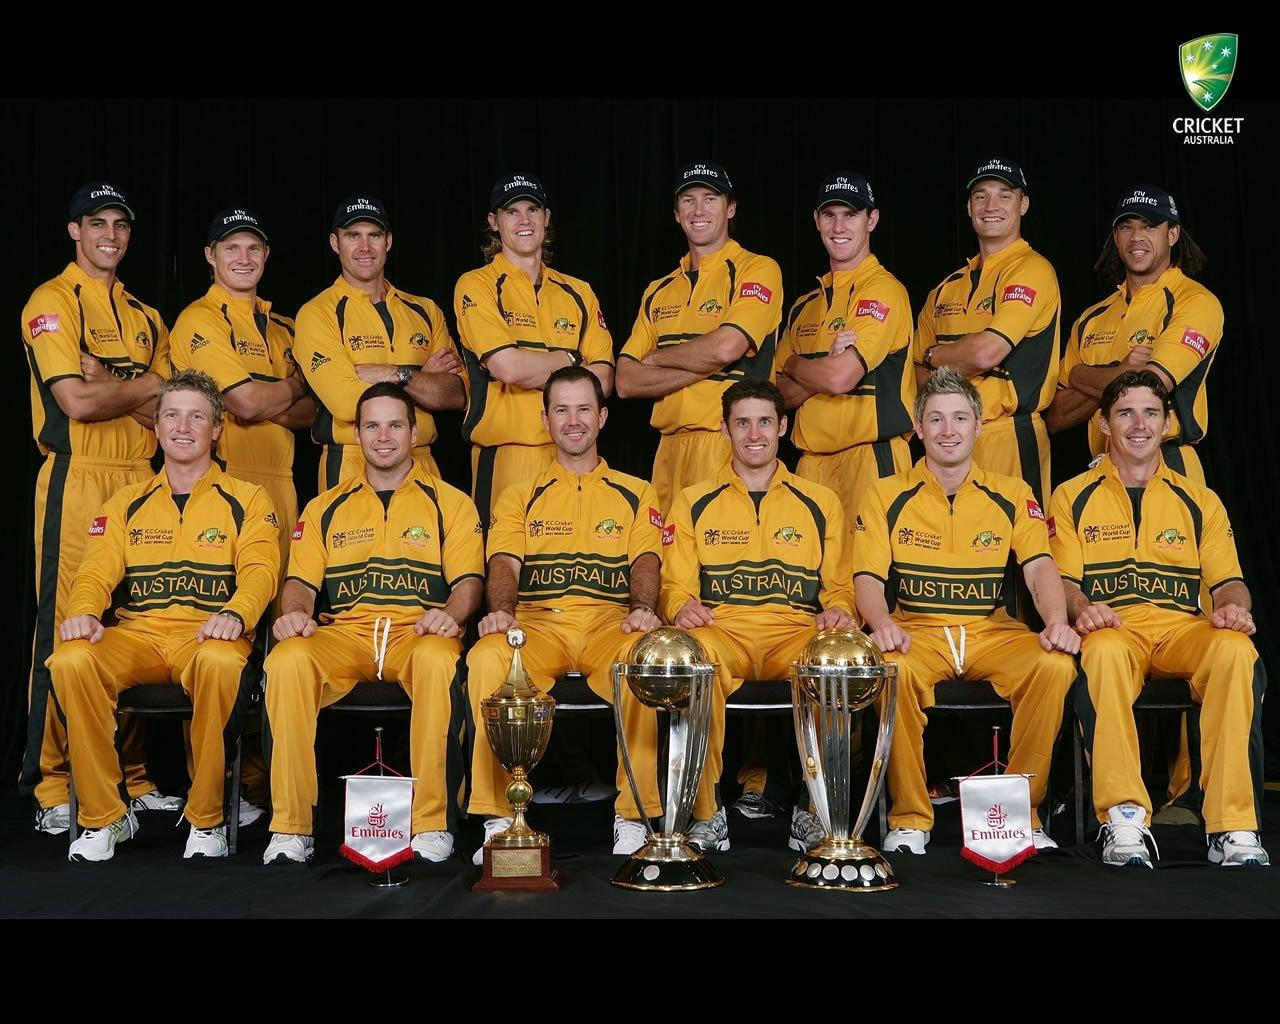 Australia Cricket Team Photograph Background